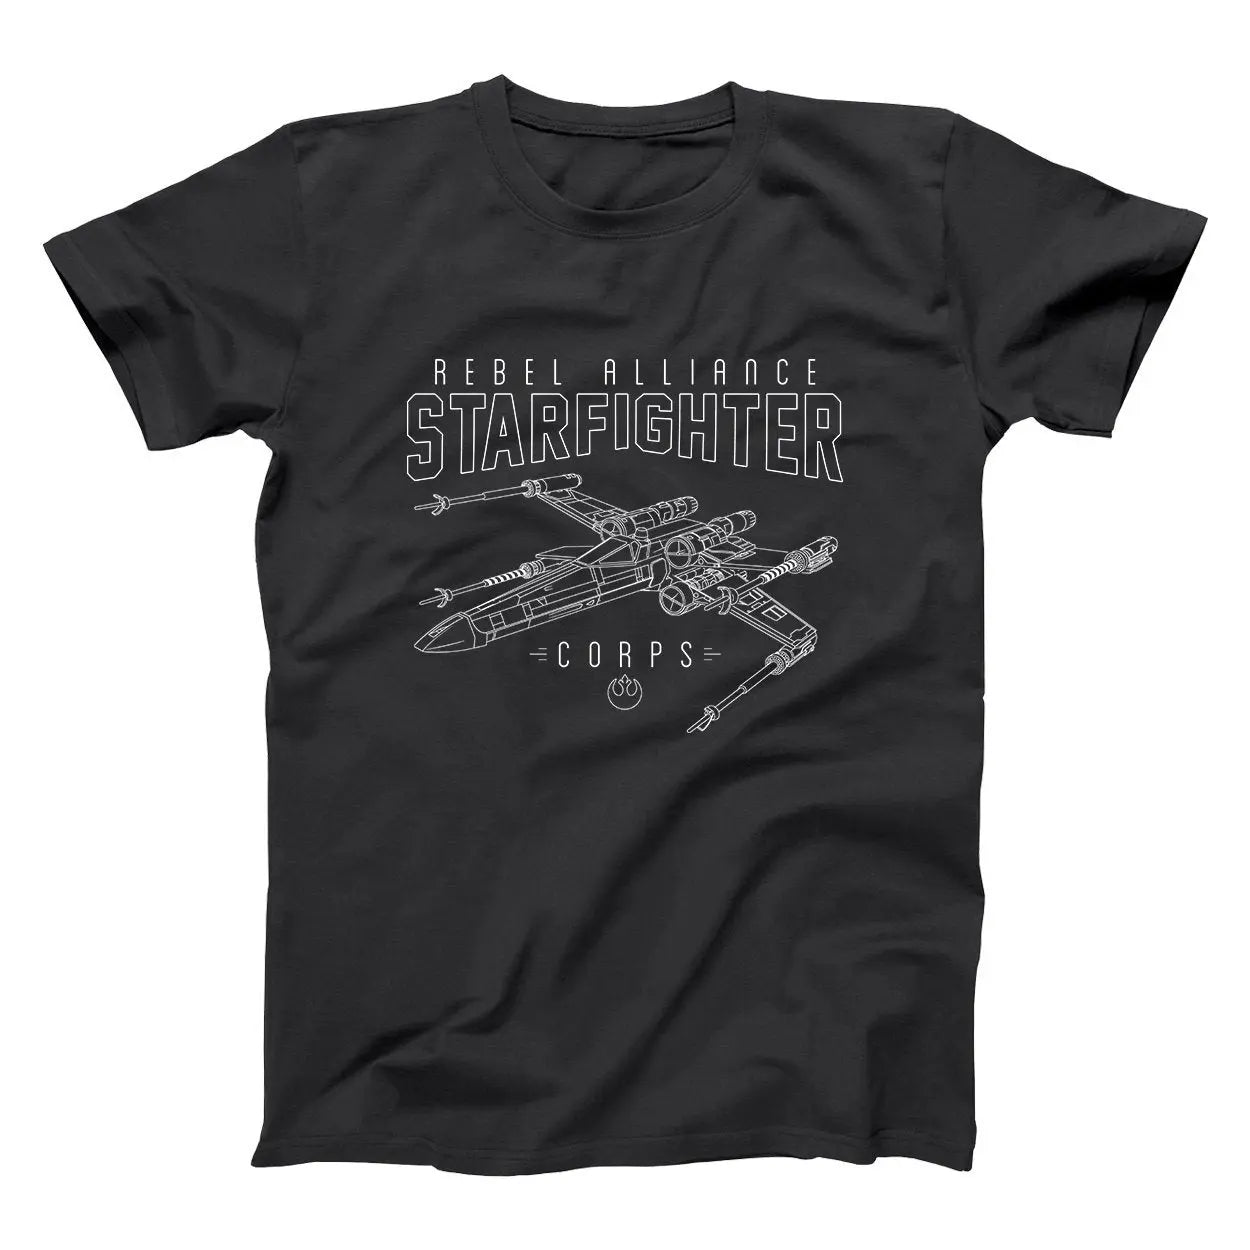 Rebel Alliance Starfighter Corps Tshirt - Donkey Tees